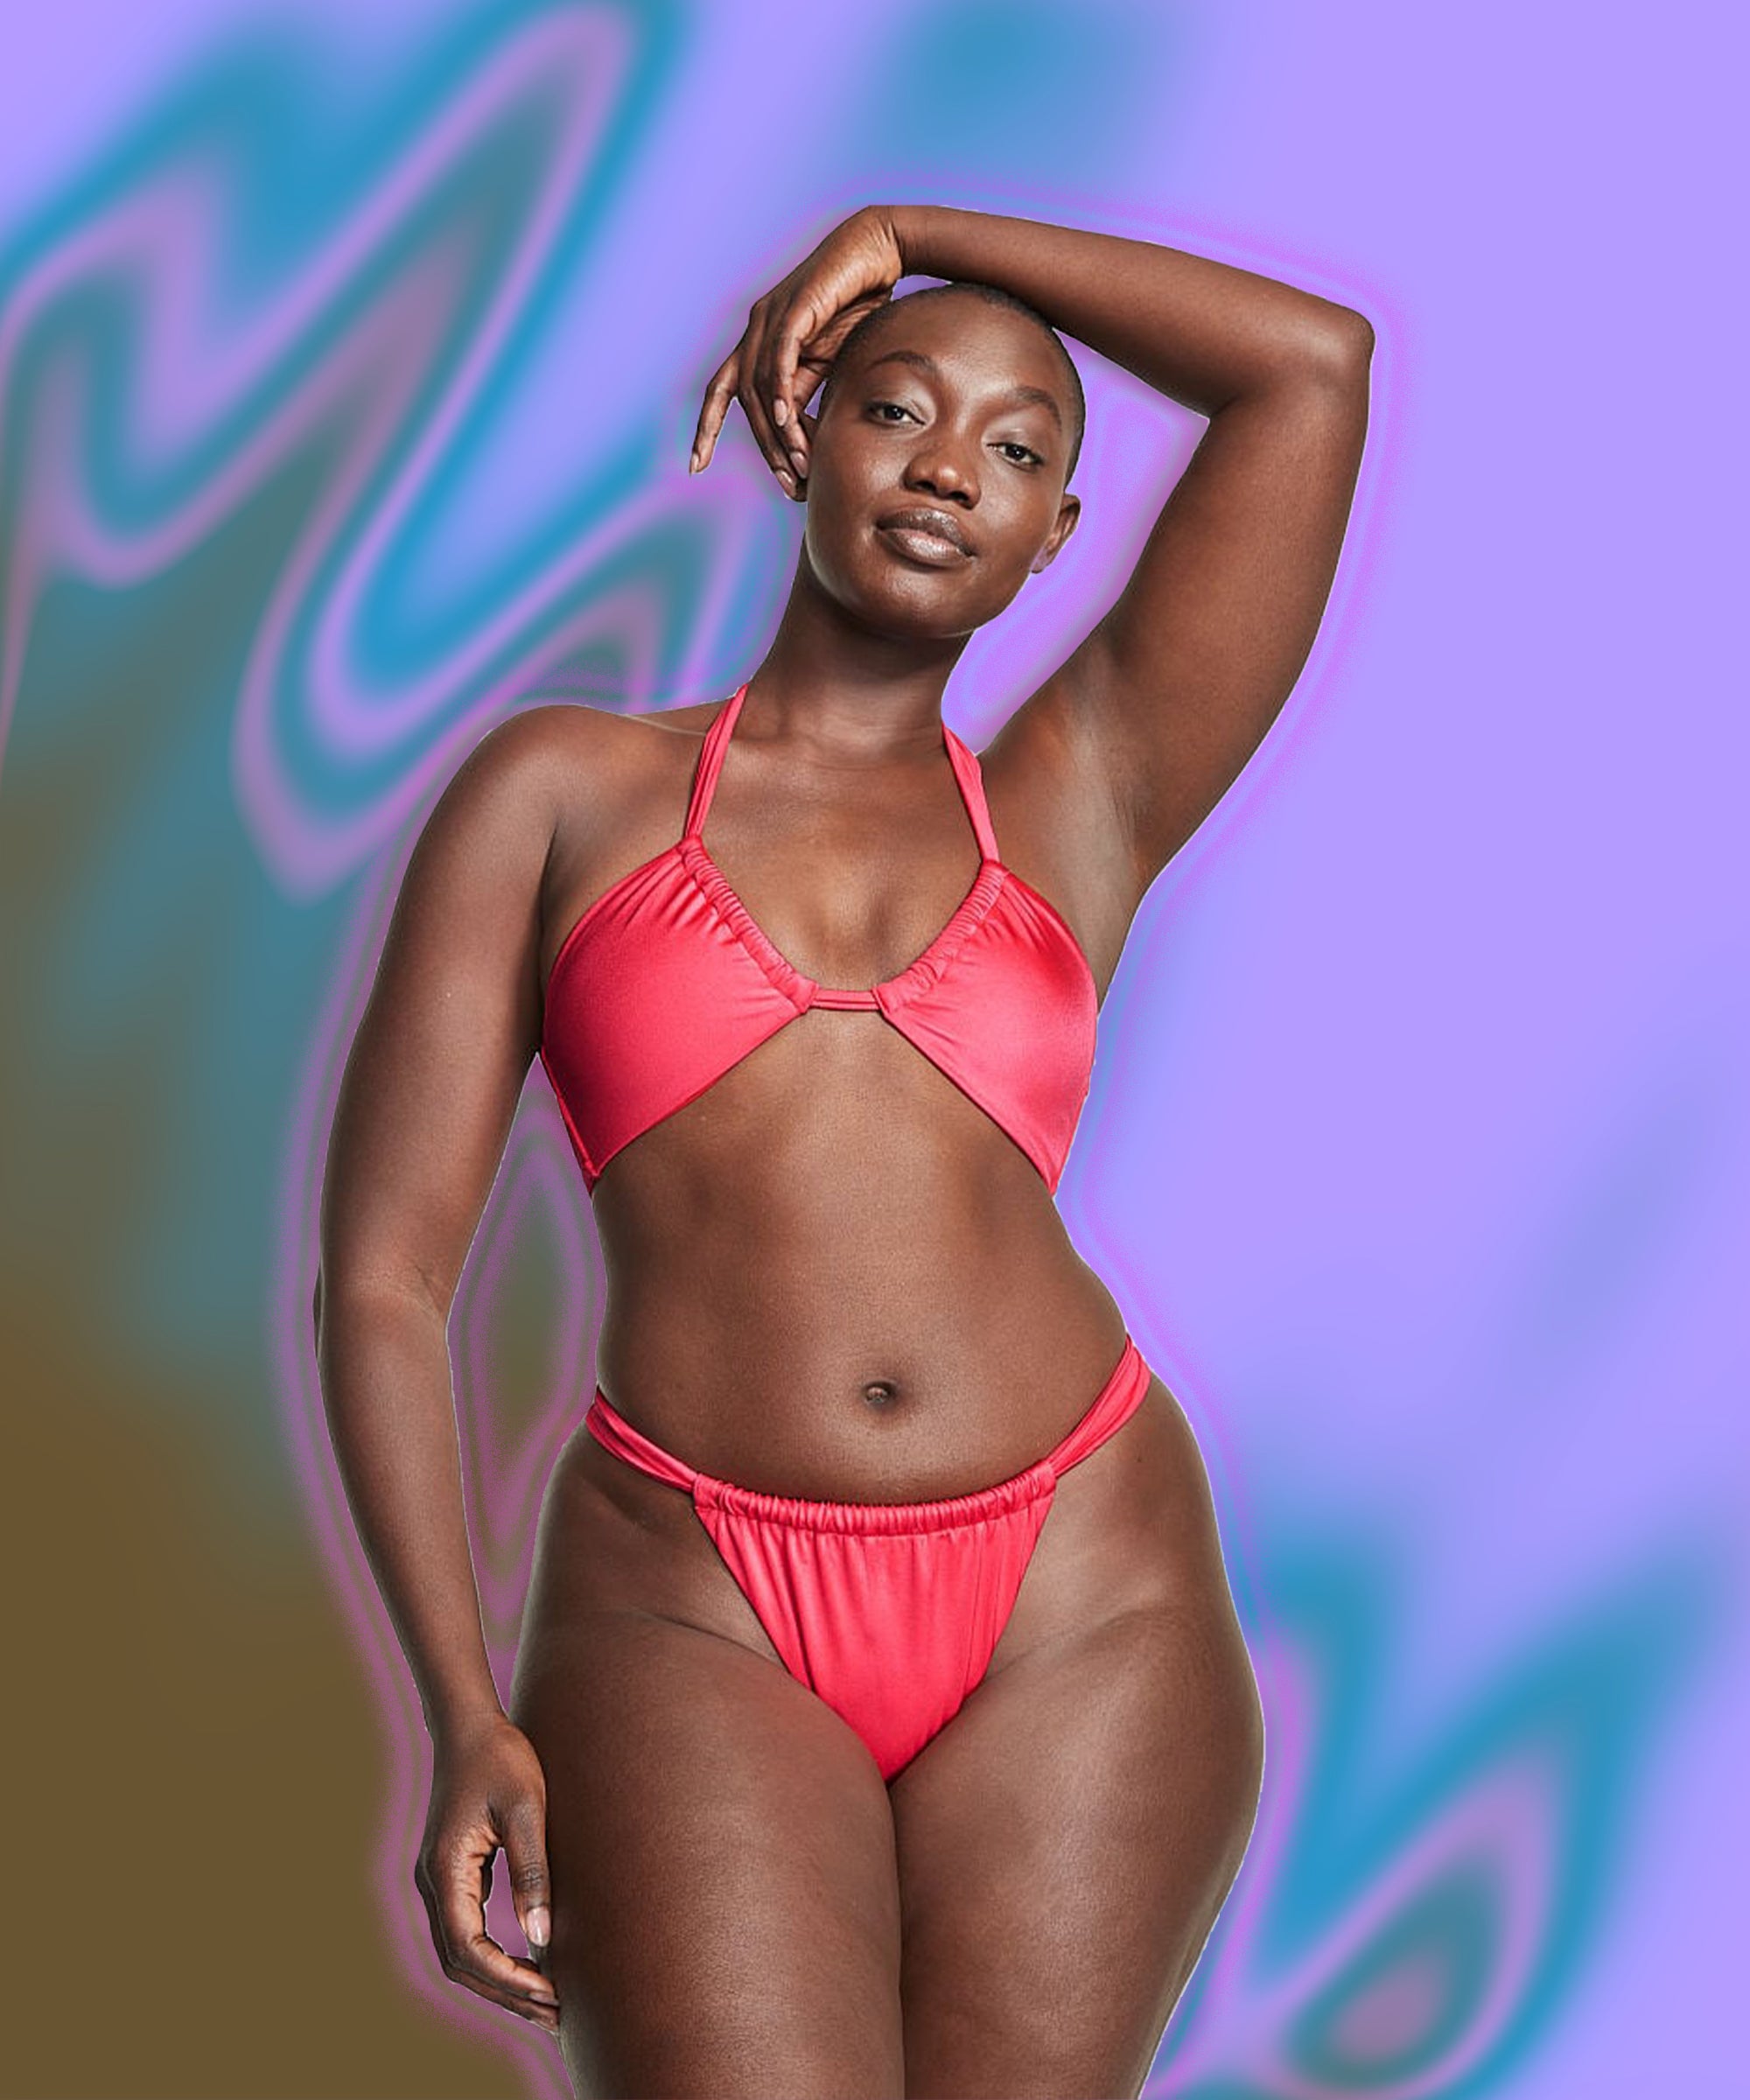 RQYYD Womens 3 Piece Swimsuit Sexy Halter Triangle Bikini High Waist Mesh  Beach Swimwear Bathing Suit Cover Up Dress(Red,M) 